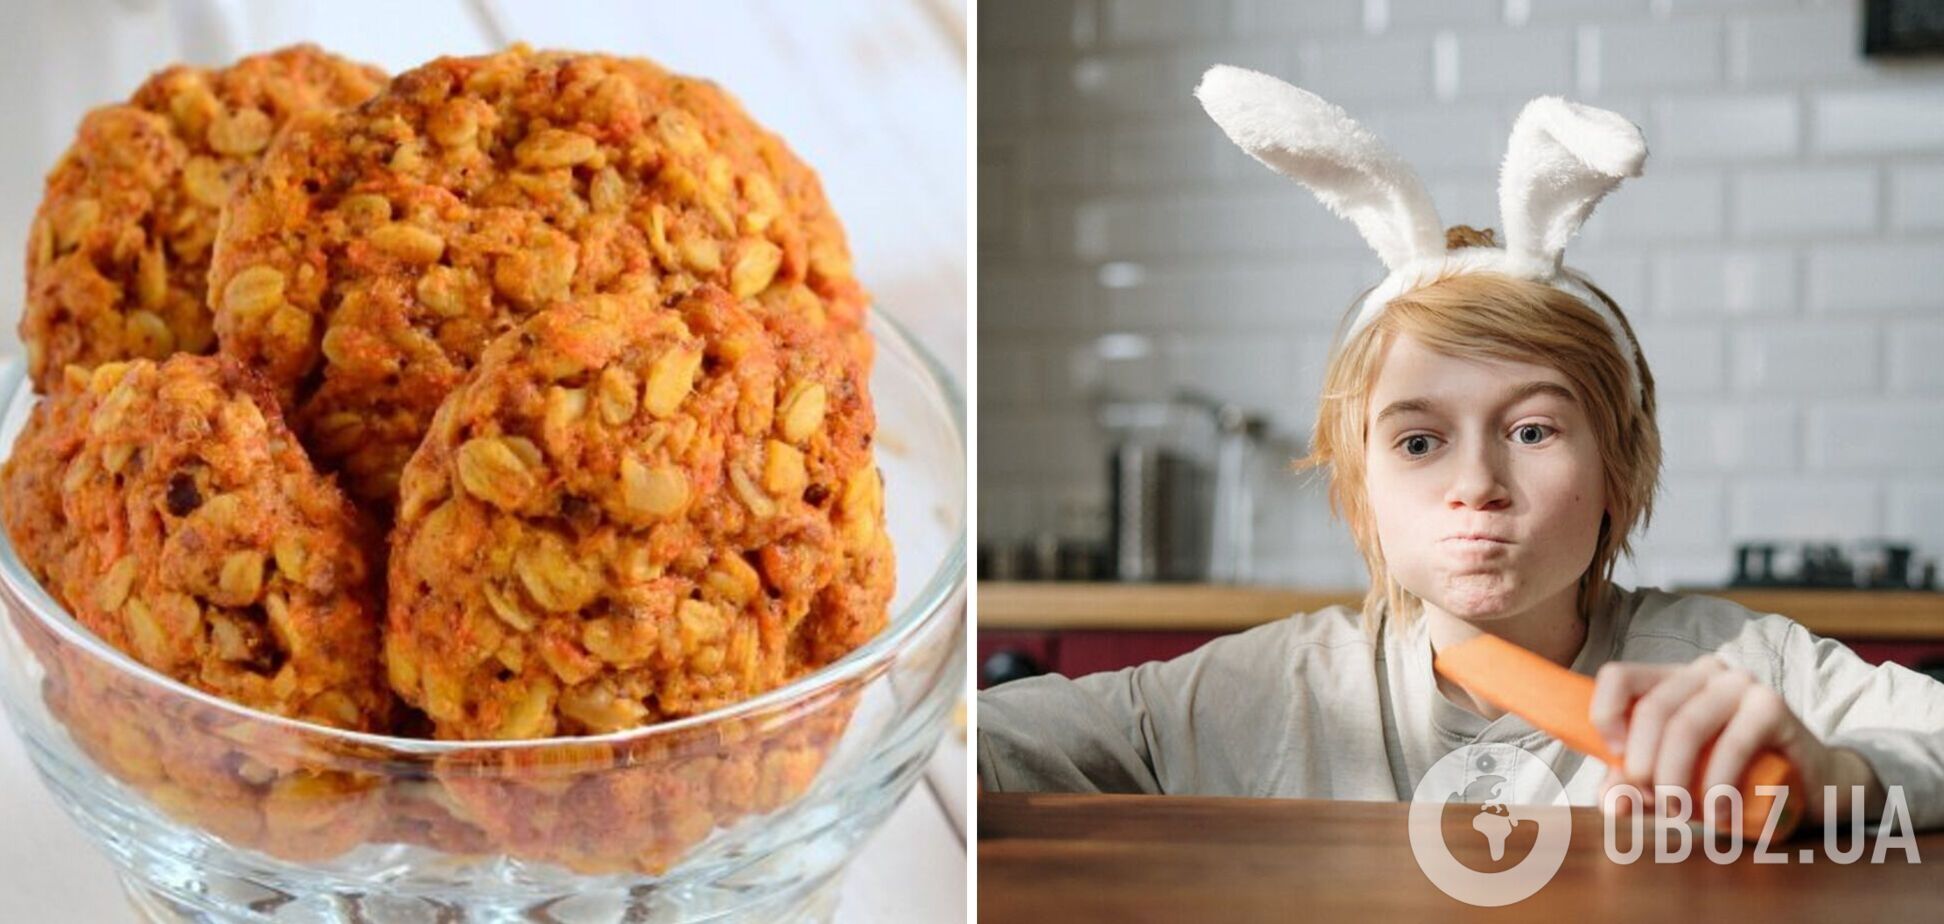 Випічка з моркви  – смачне печиво, яке варто приготувати